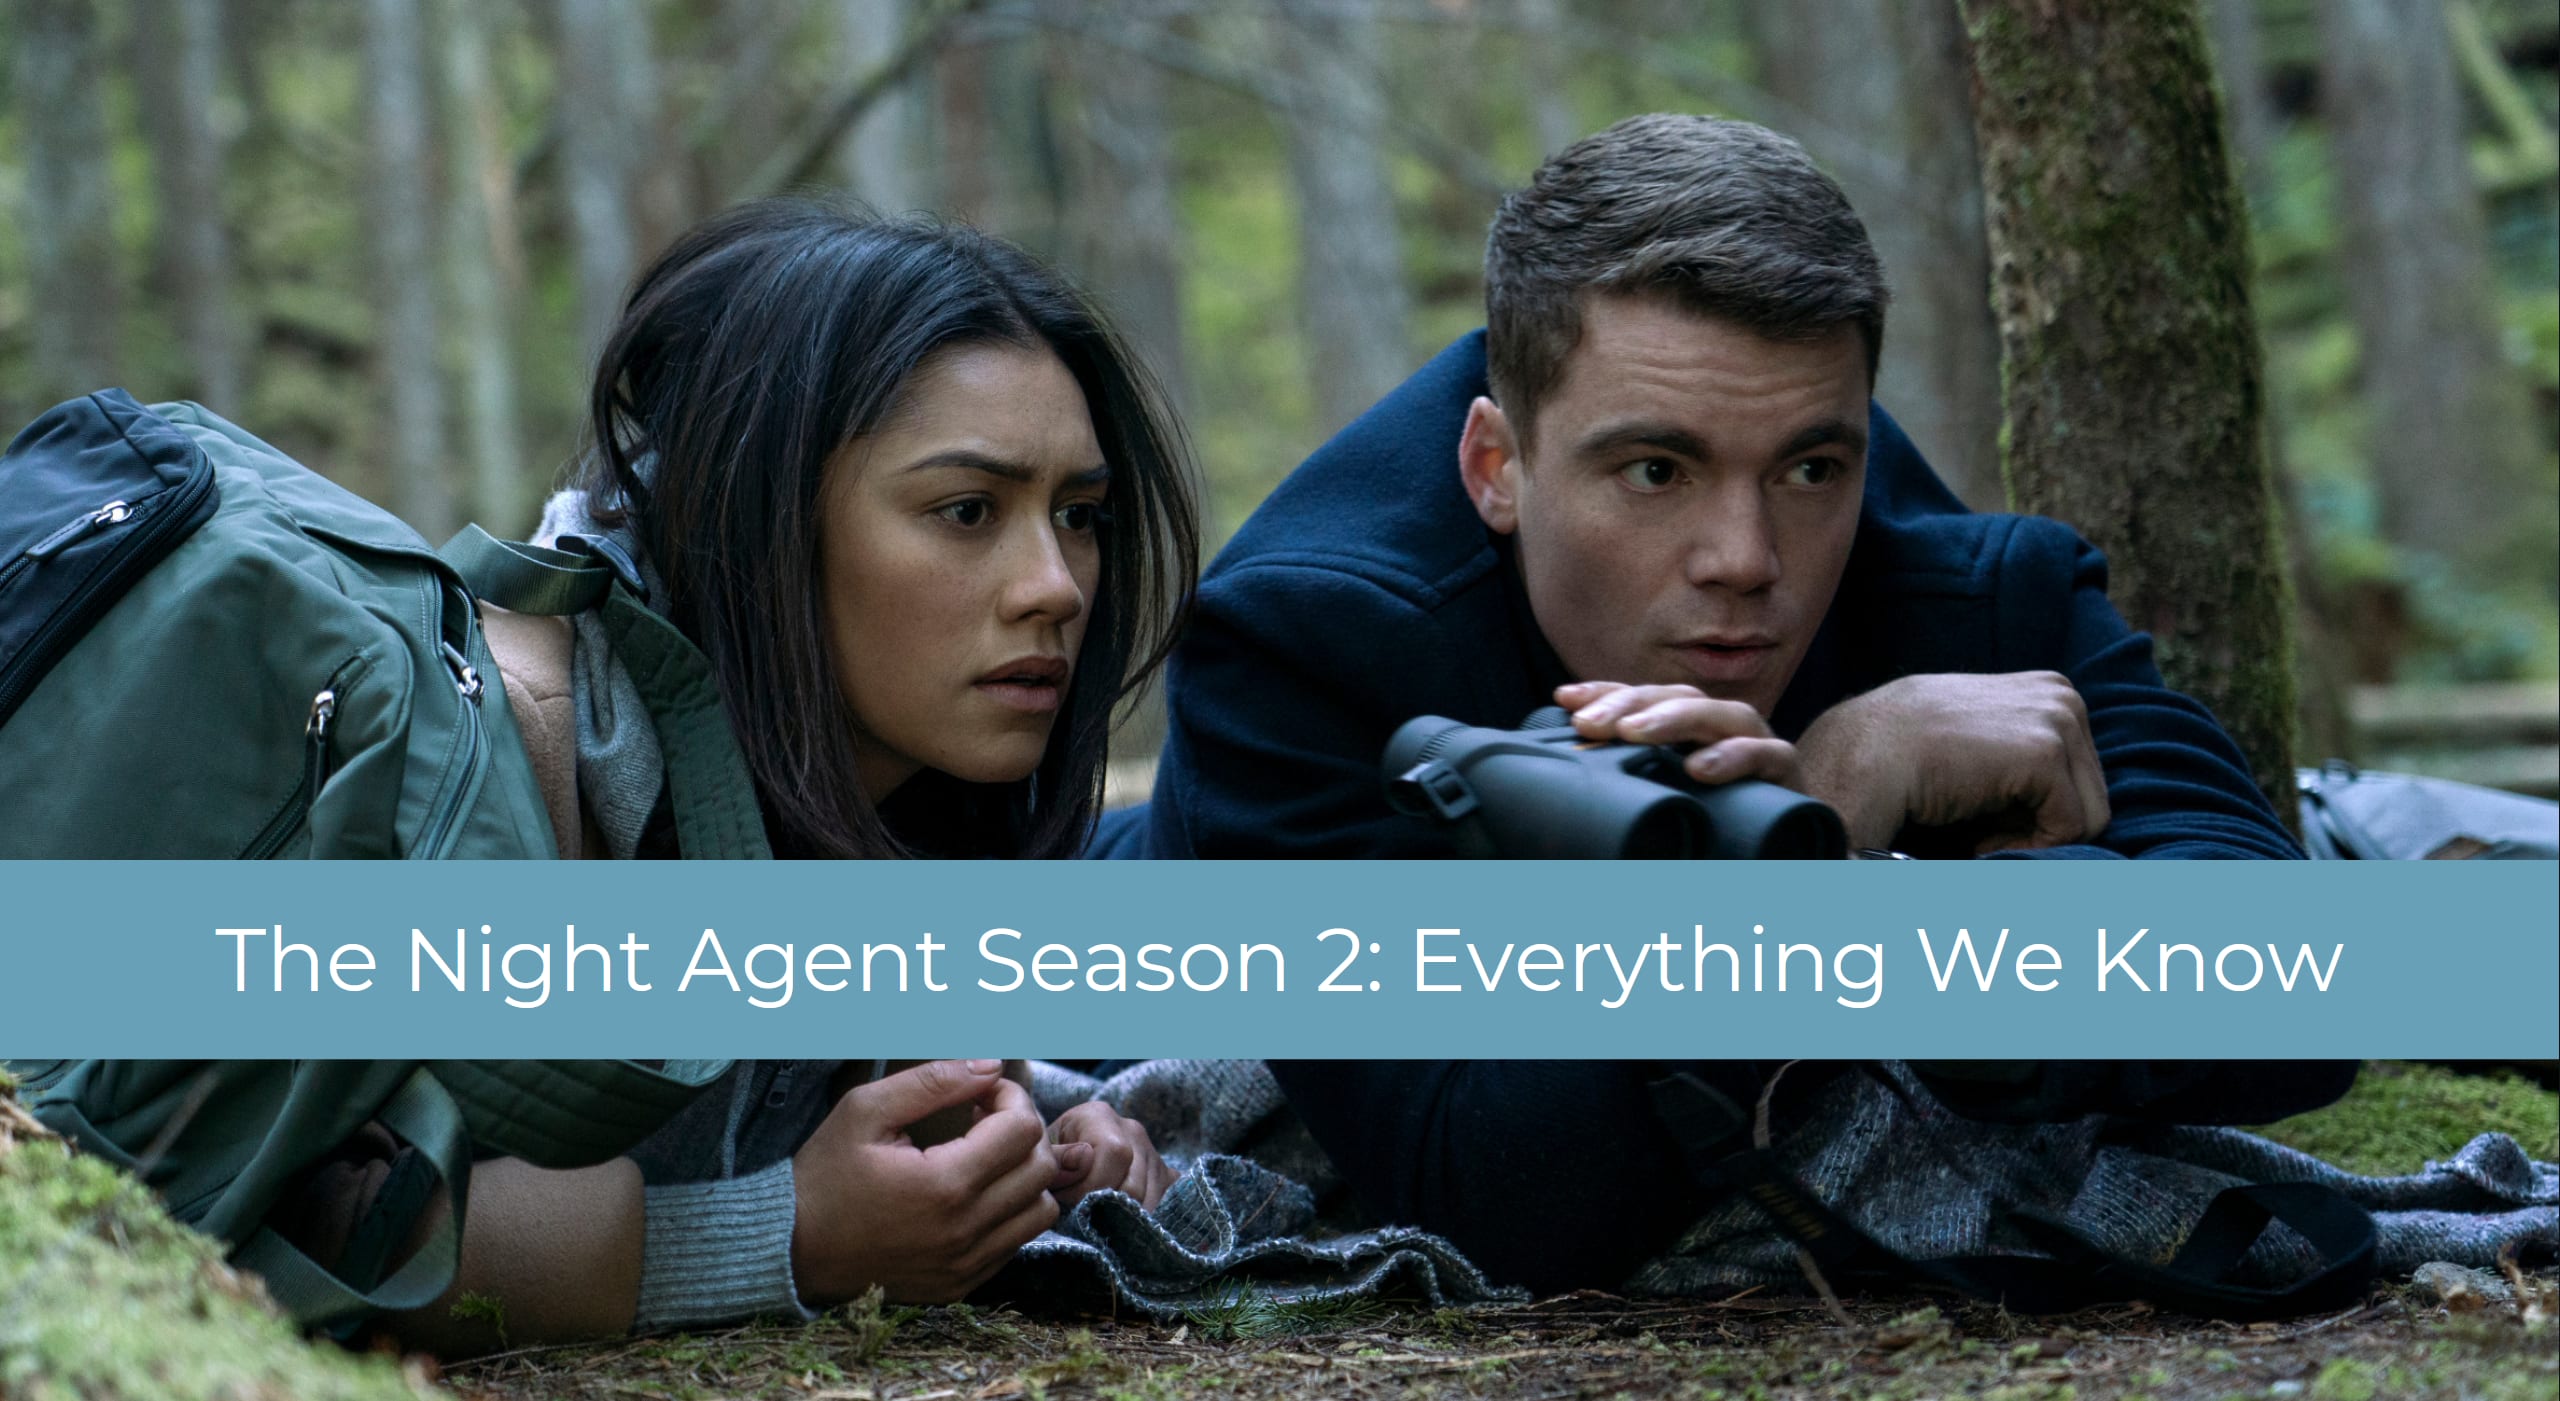 The Night Agent Season 2: Everything we know so far - Dexerto